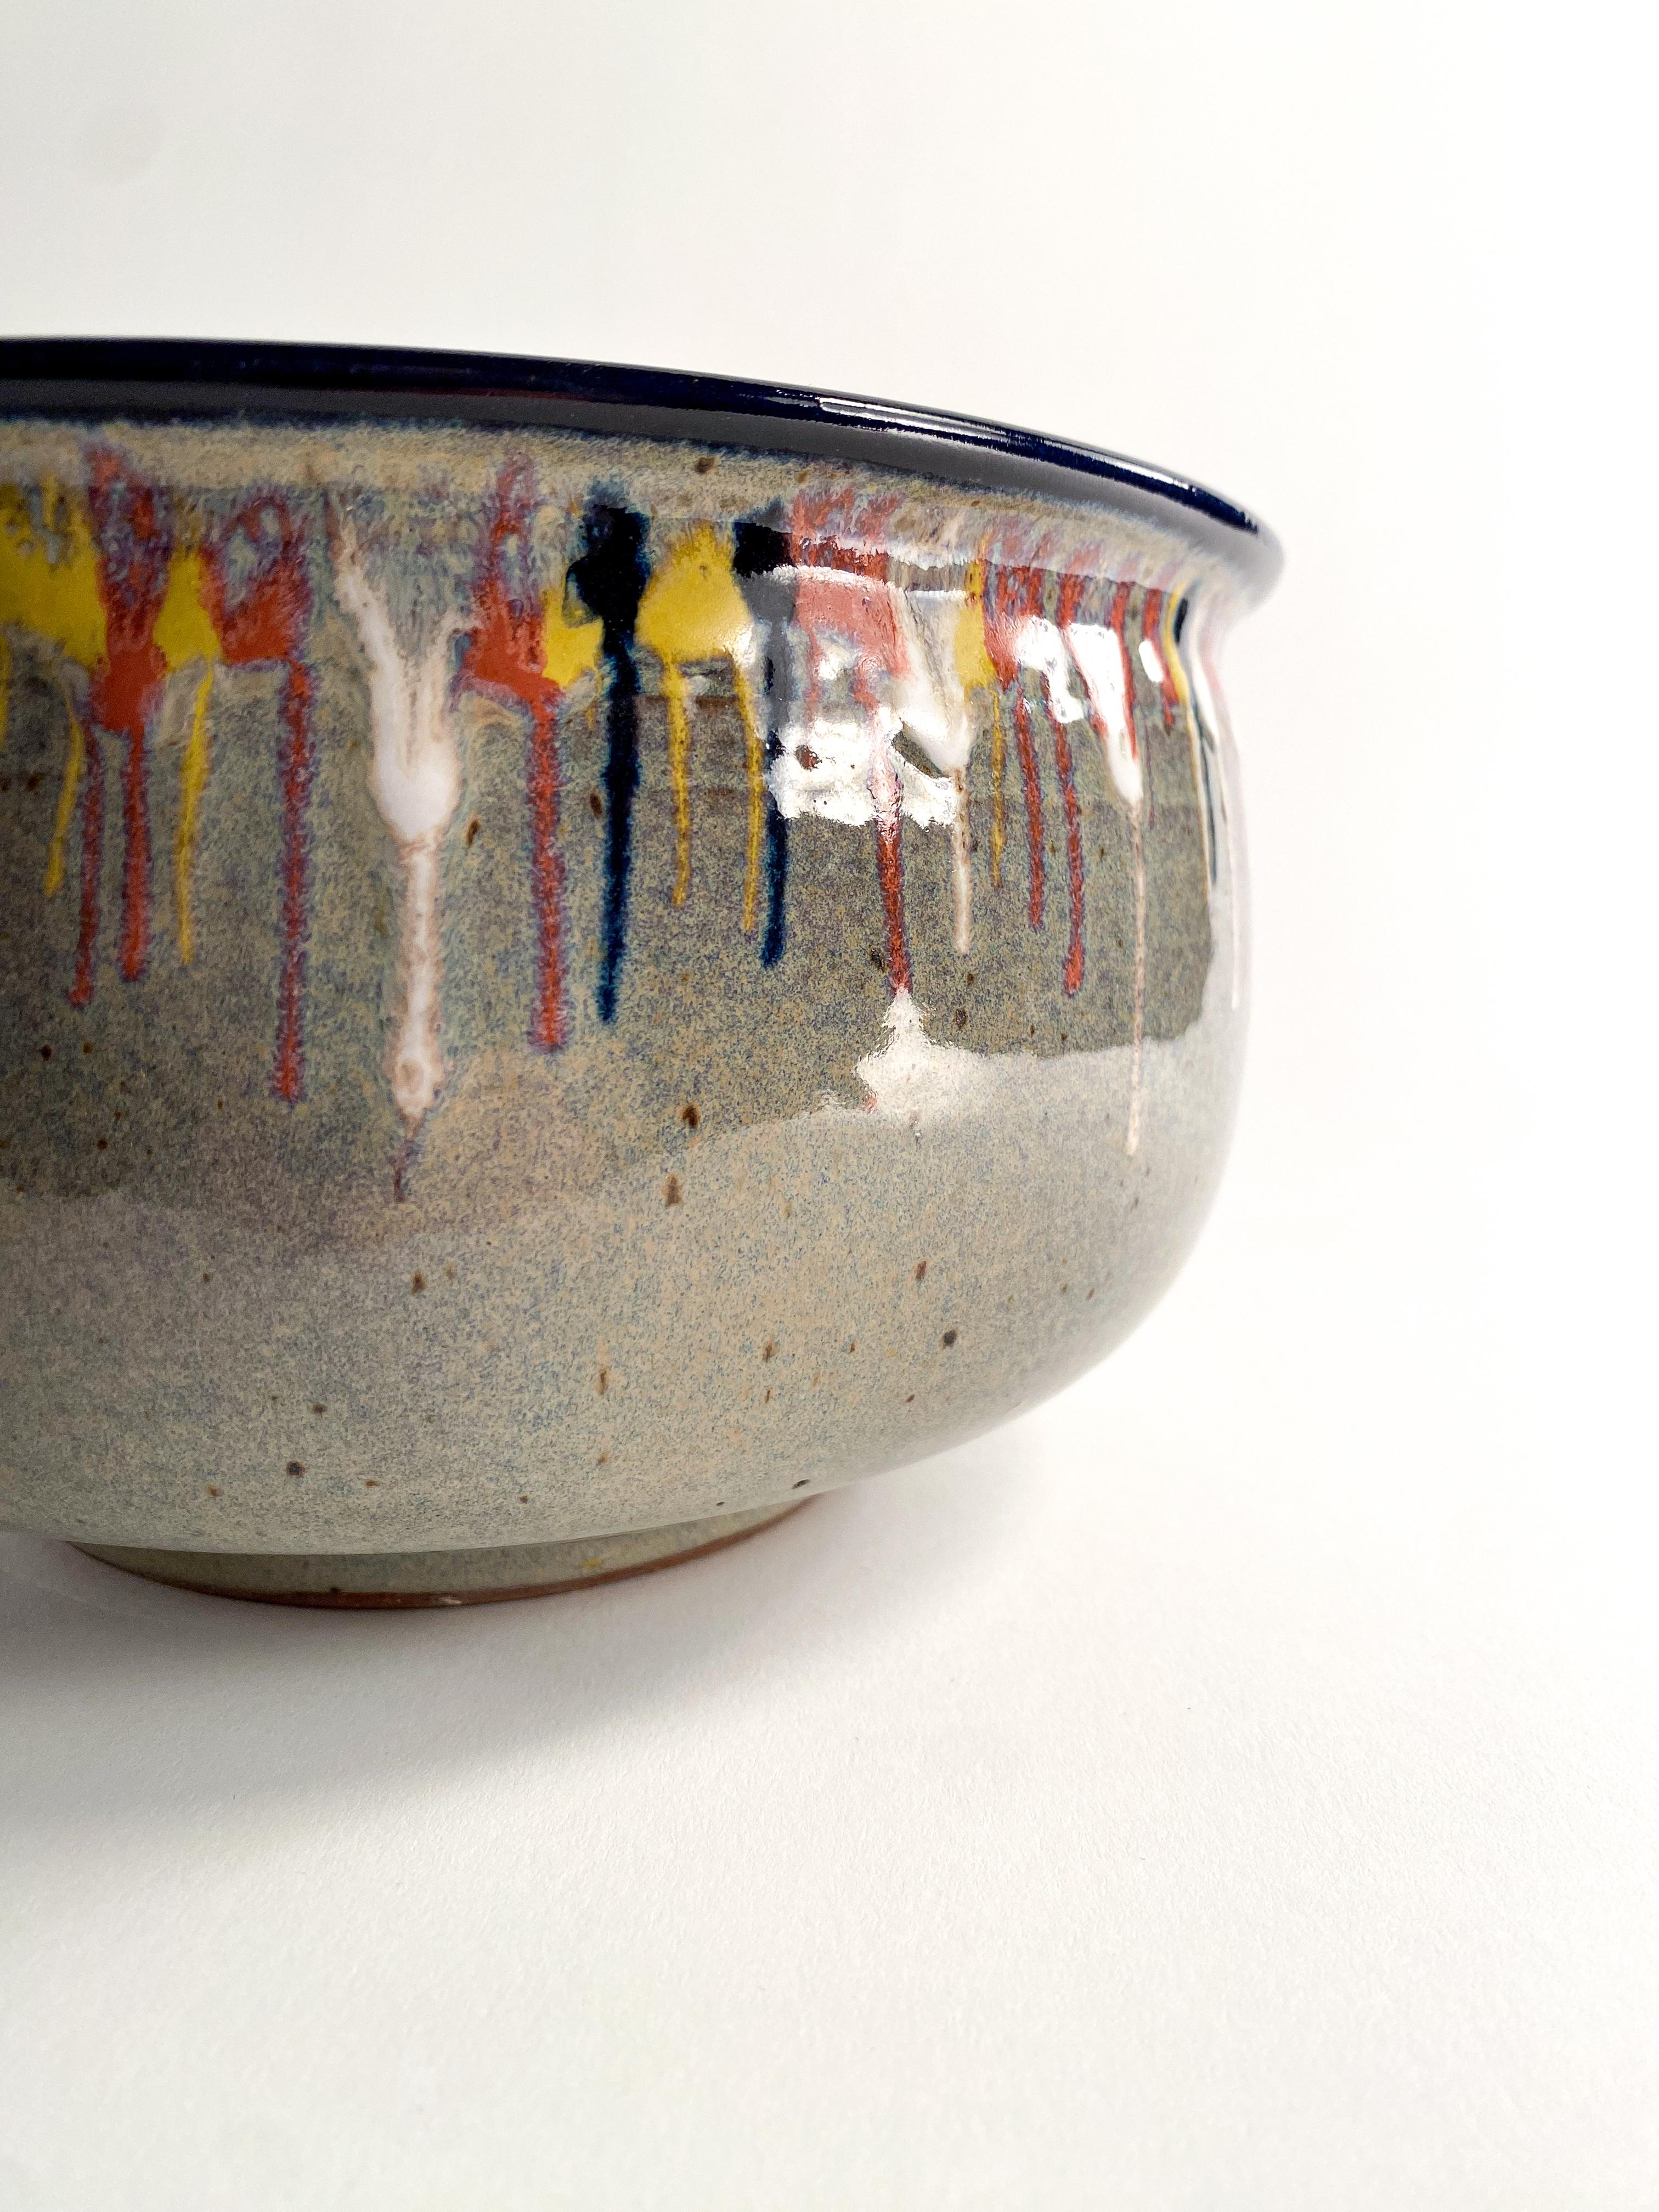 Drip Glaze Studio Pottery Bowl In Good Condition For Sale In Philadelphia, PA